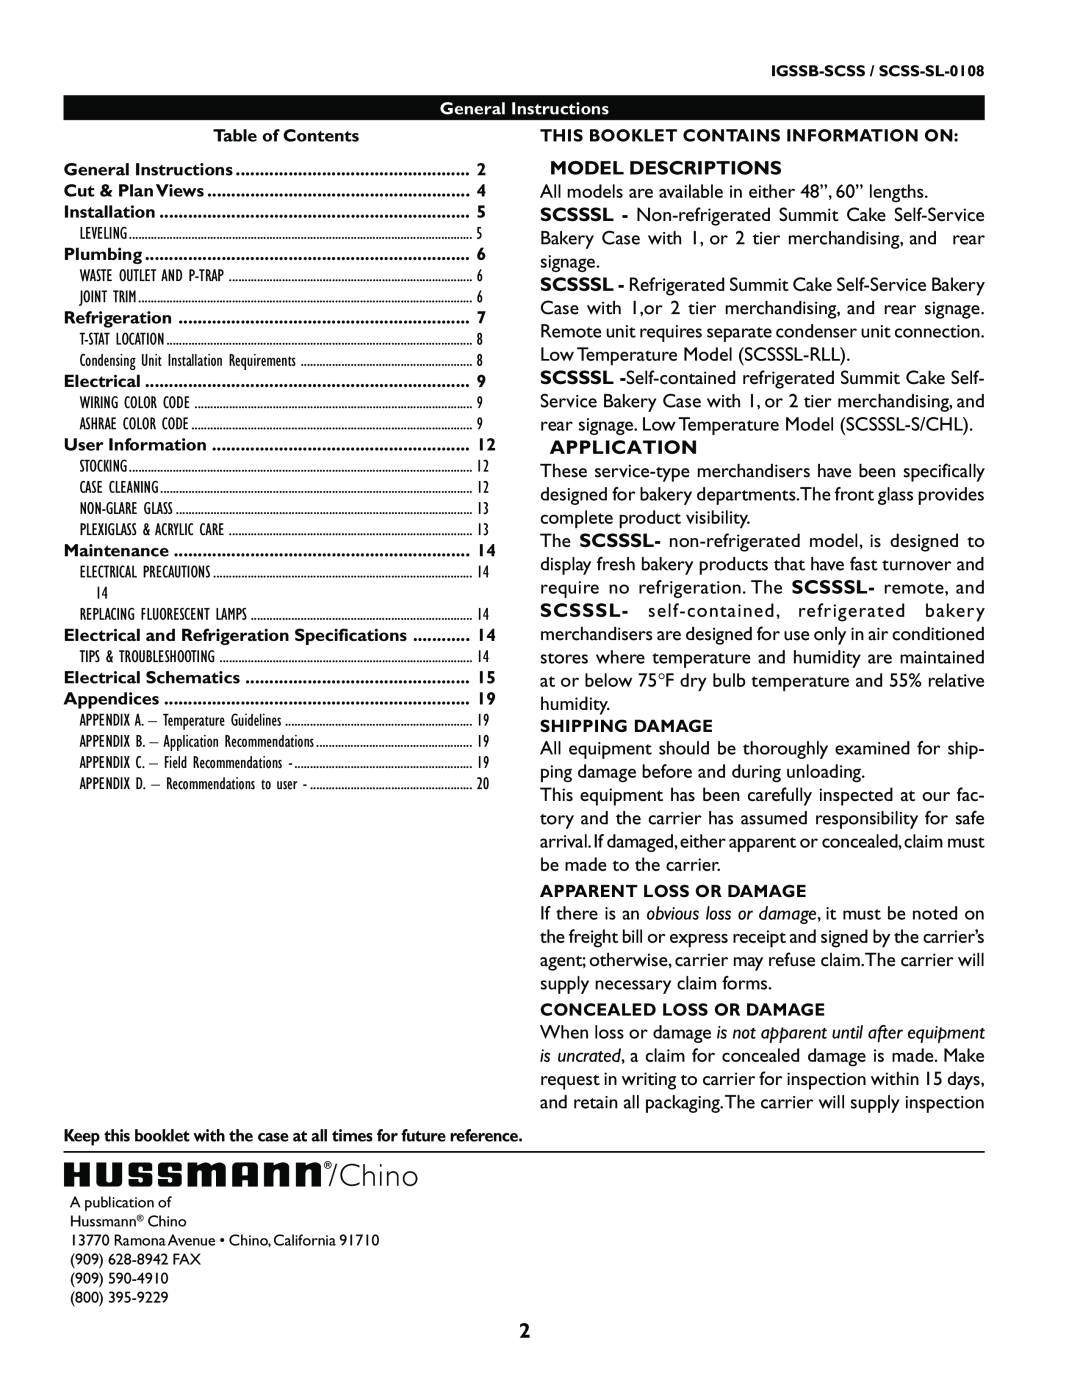 hussman SCSS-SL manual Model Descriptions, Application, Chino, General Instructions 